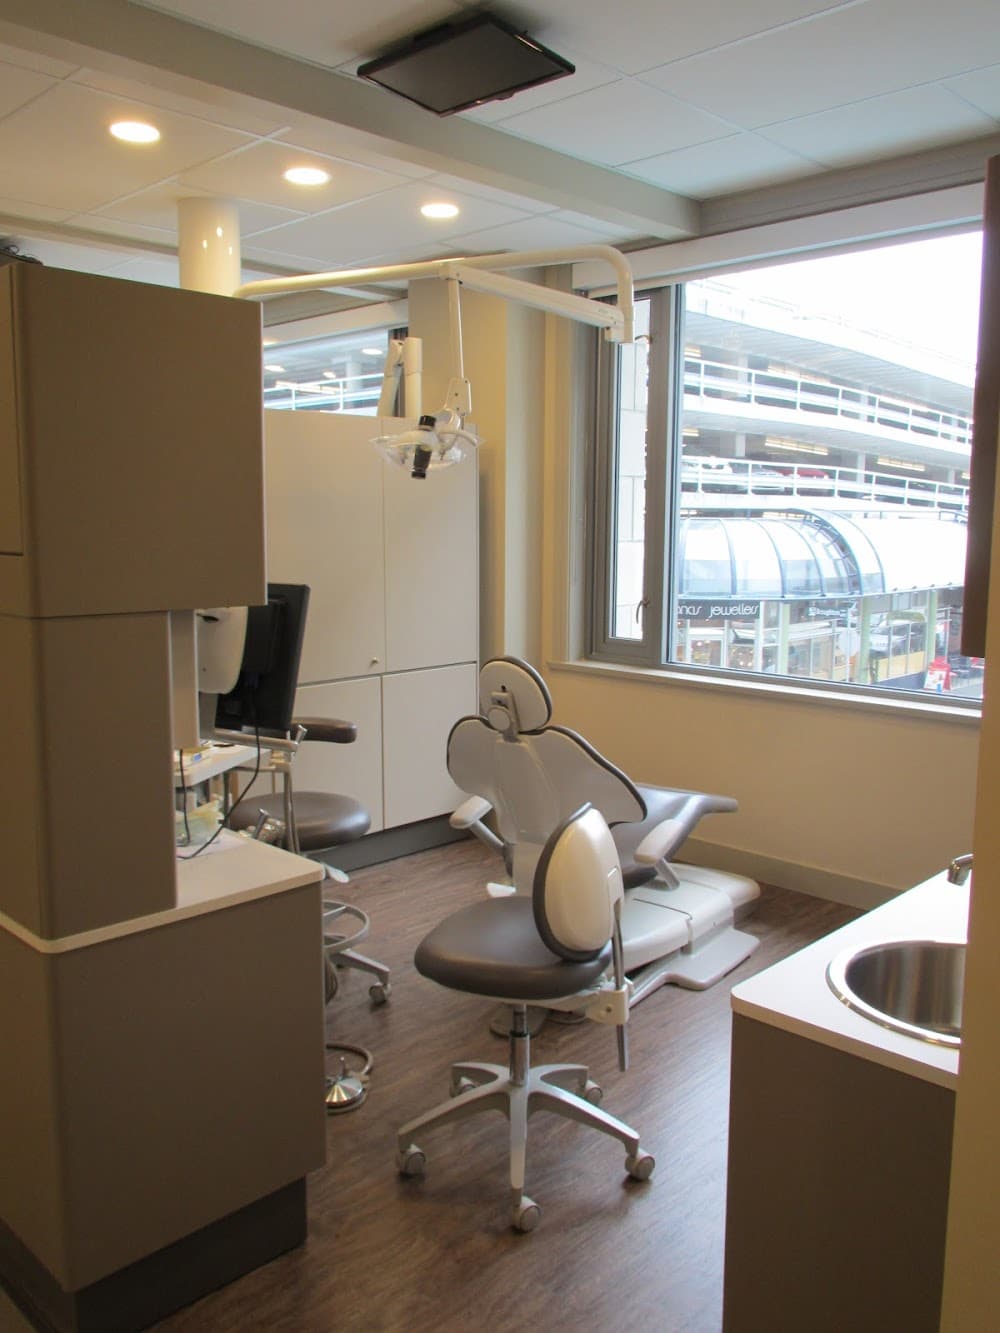 City Center Dental Clinic